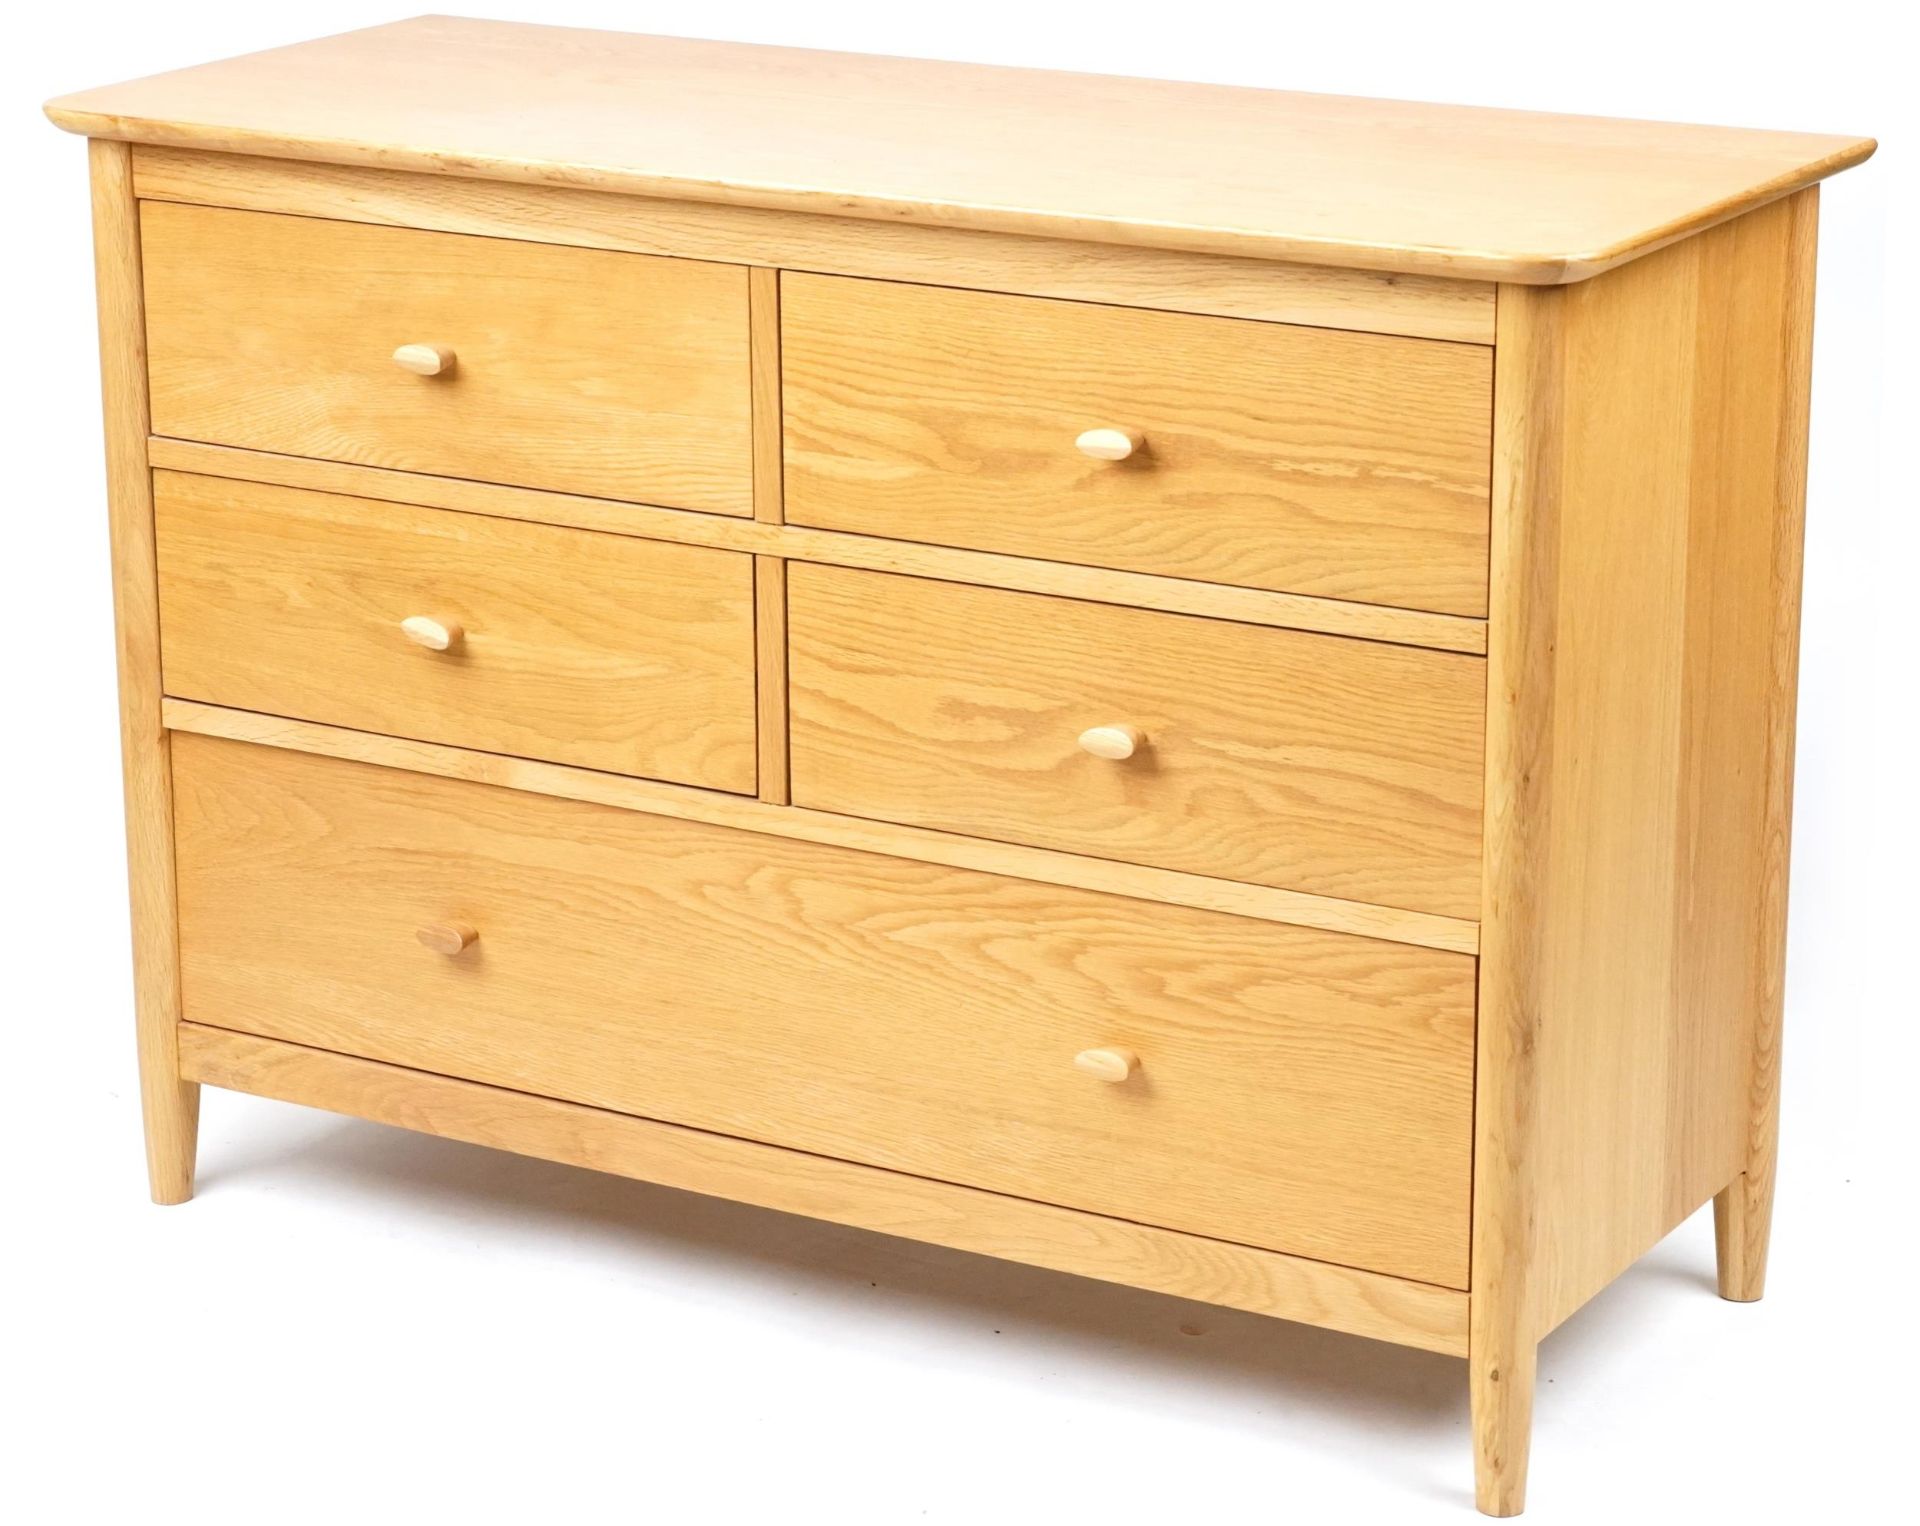 Ercol Teramo contemporary light oak five drawer chest, 79cm H x 114cm W x 47cm D